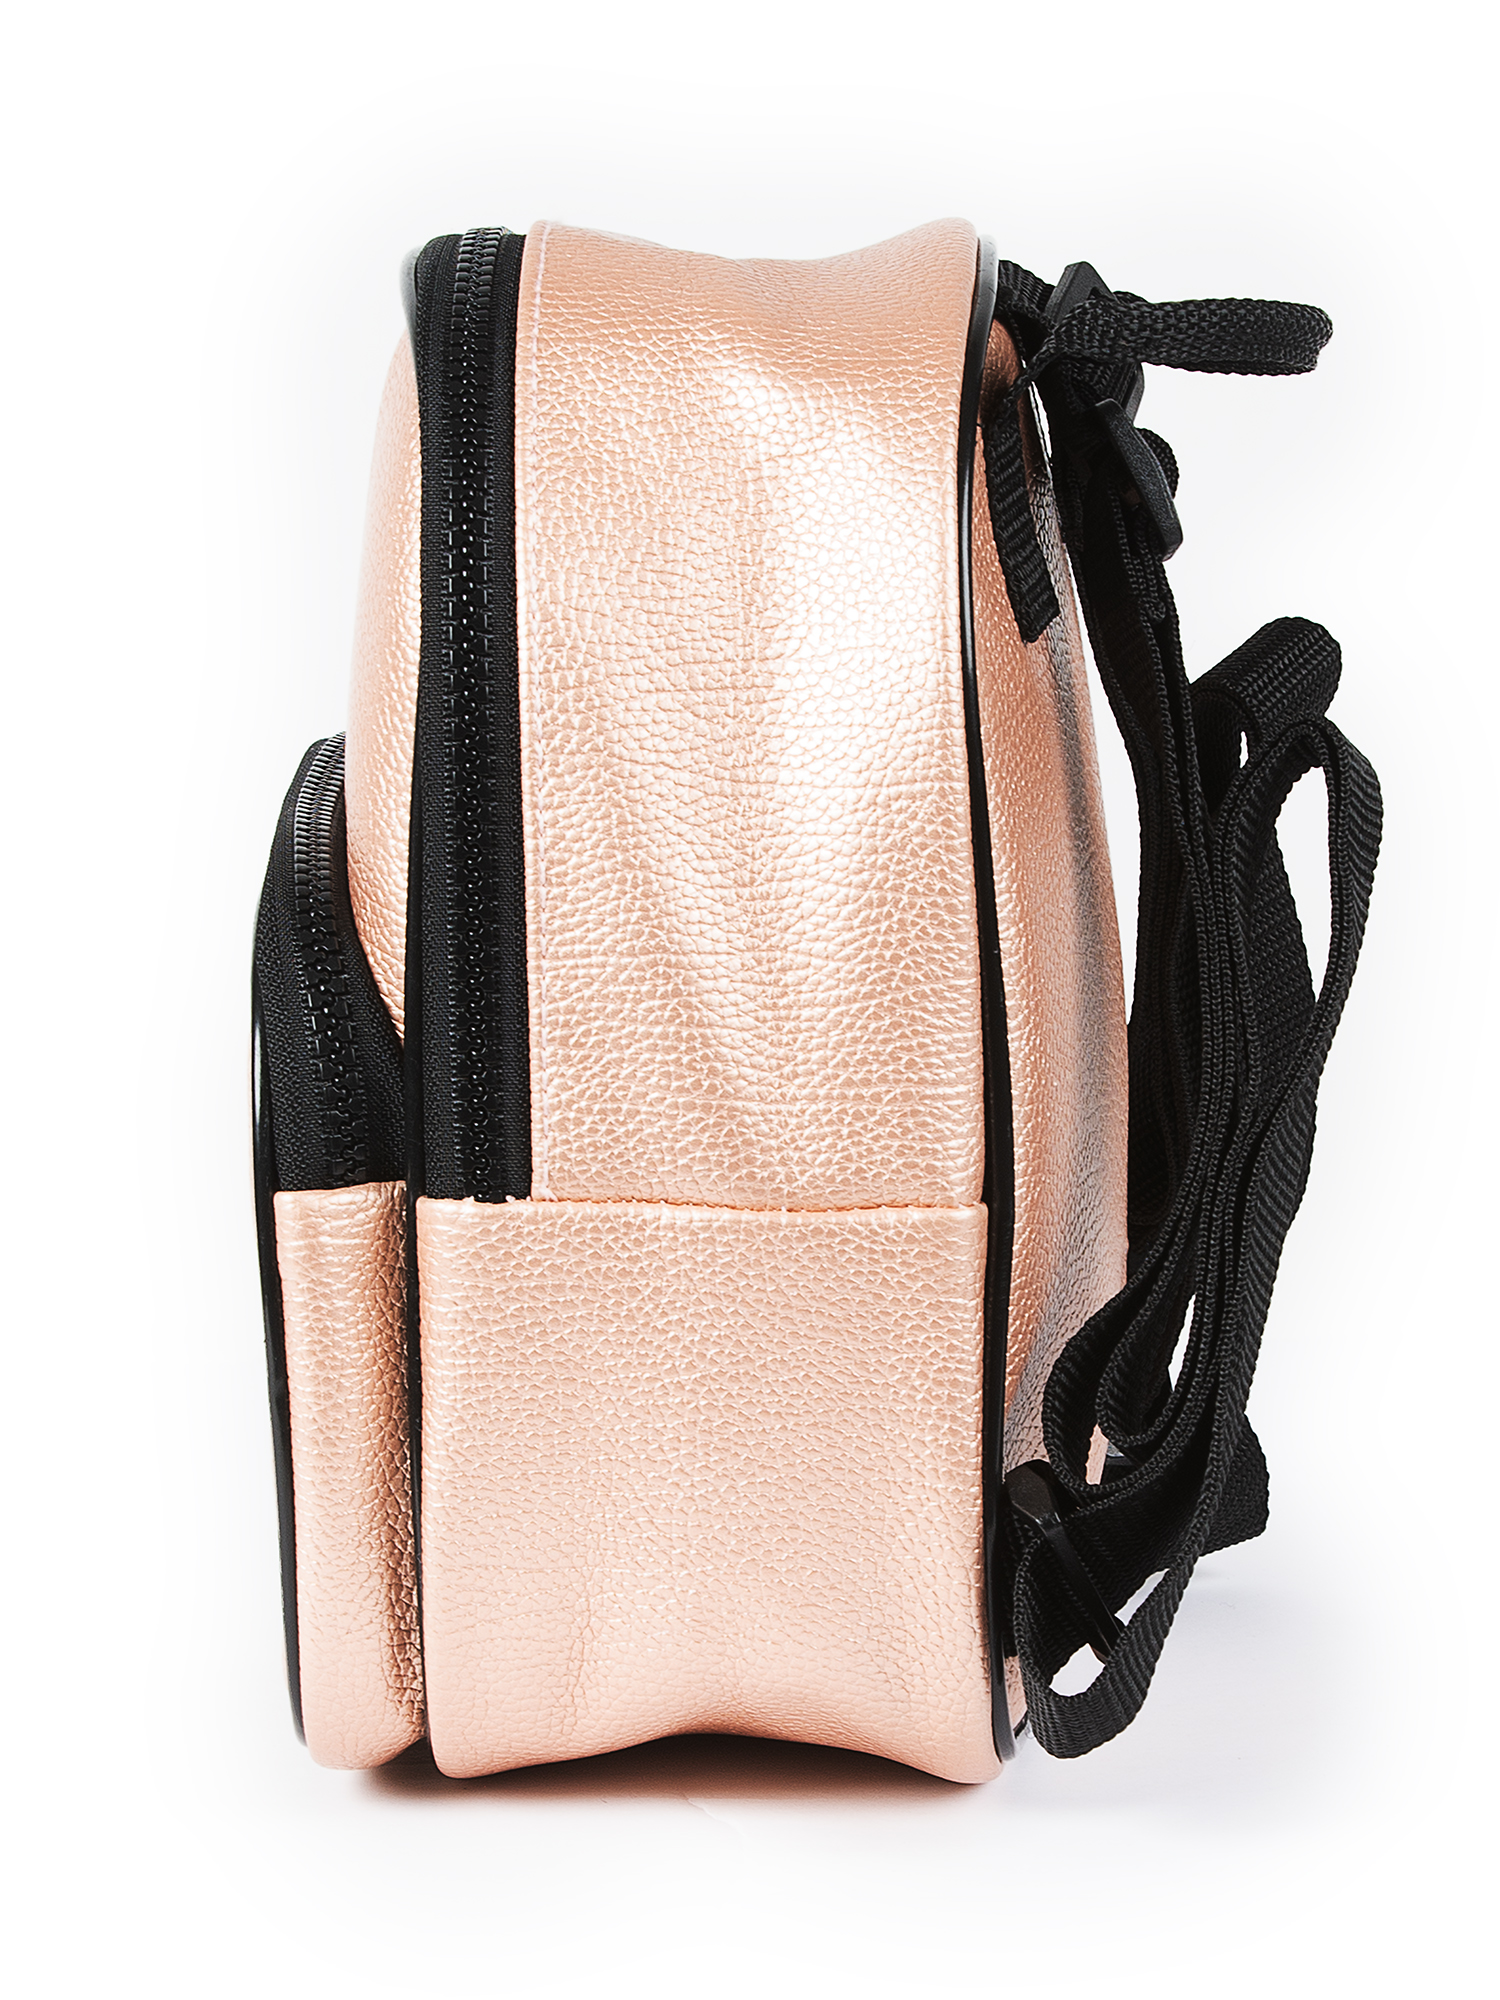 Reebok Classic Women's Mini Backpack Gold - image 4 of 4